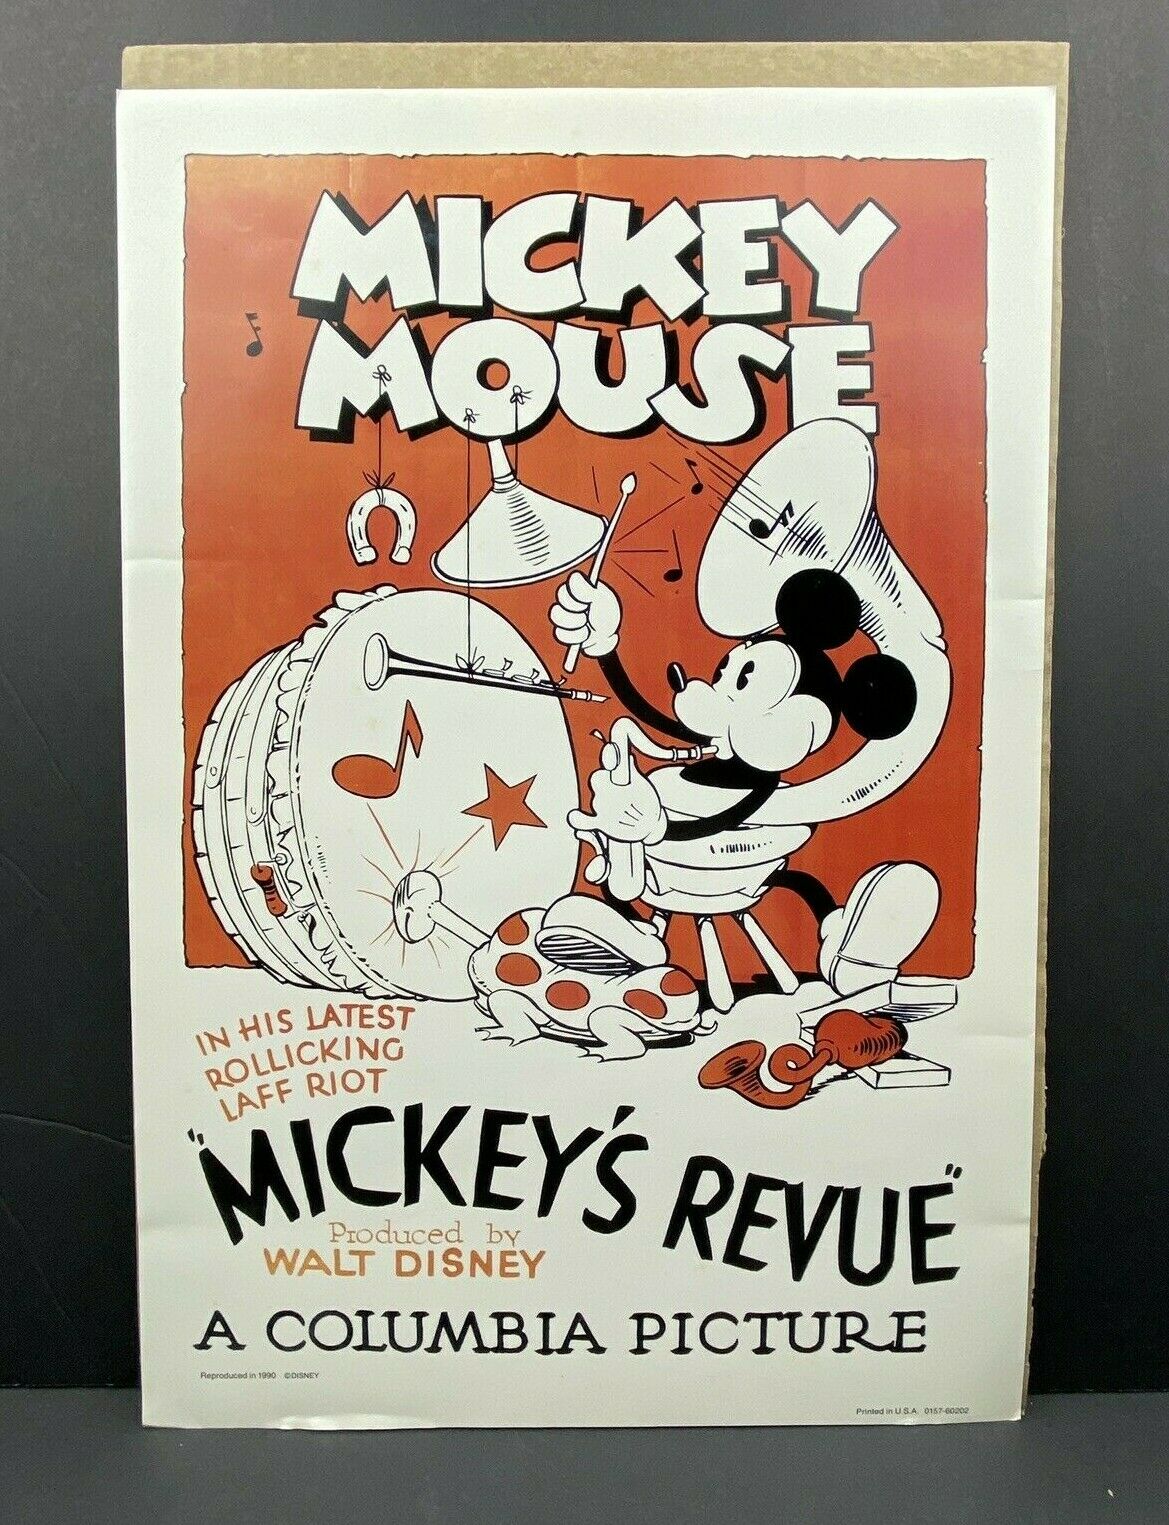 Mickeys Revue Movie Poster Reproduction Of 1932 Movie Disney 17 X 11.5